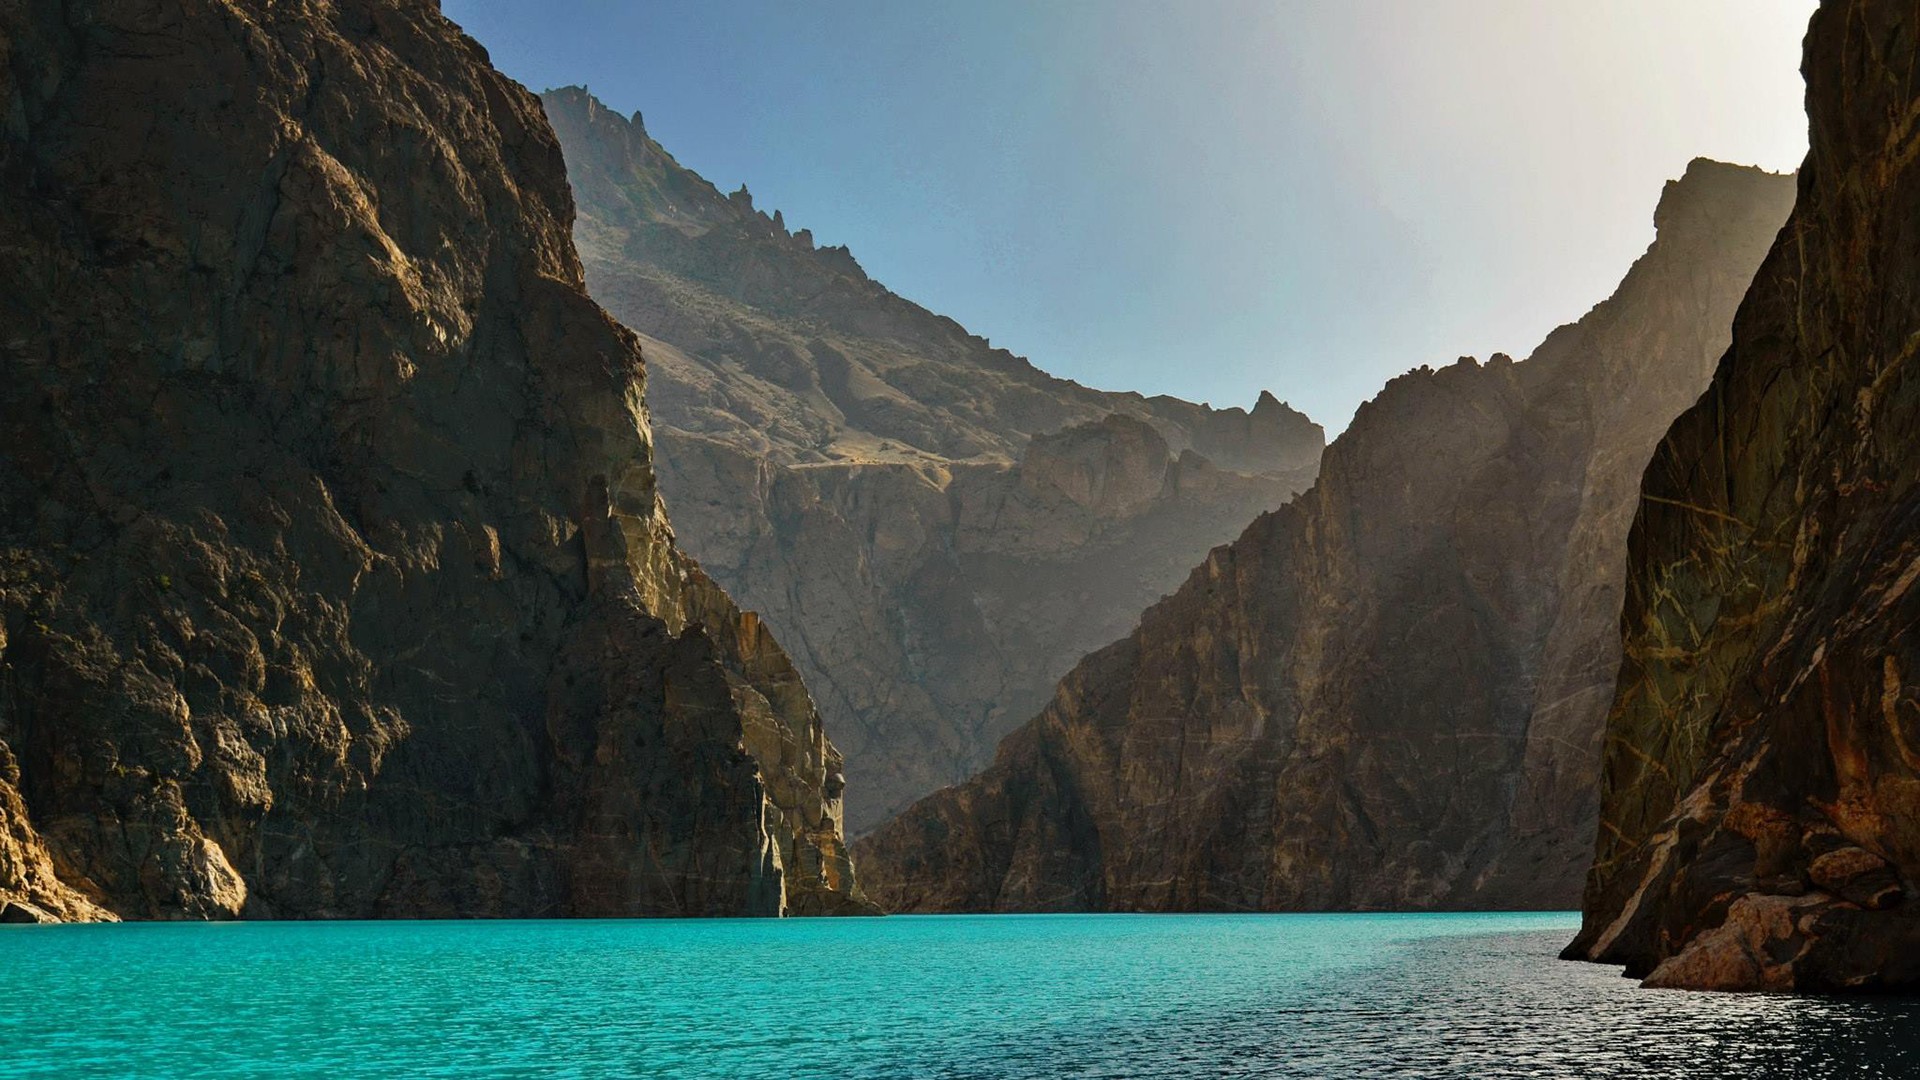 General 1920x1080 Pakistan lake mountains water blue nature landscape cyan